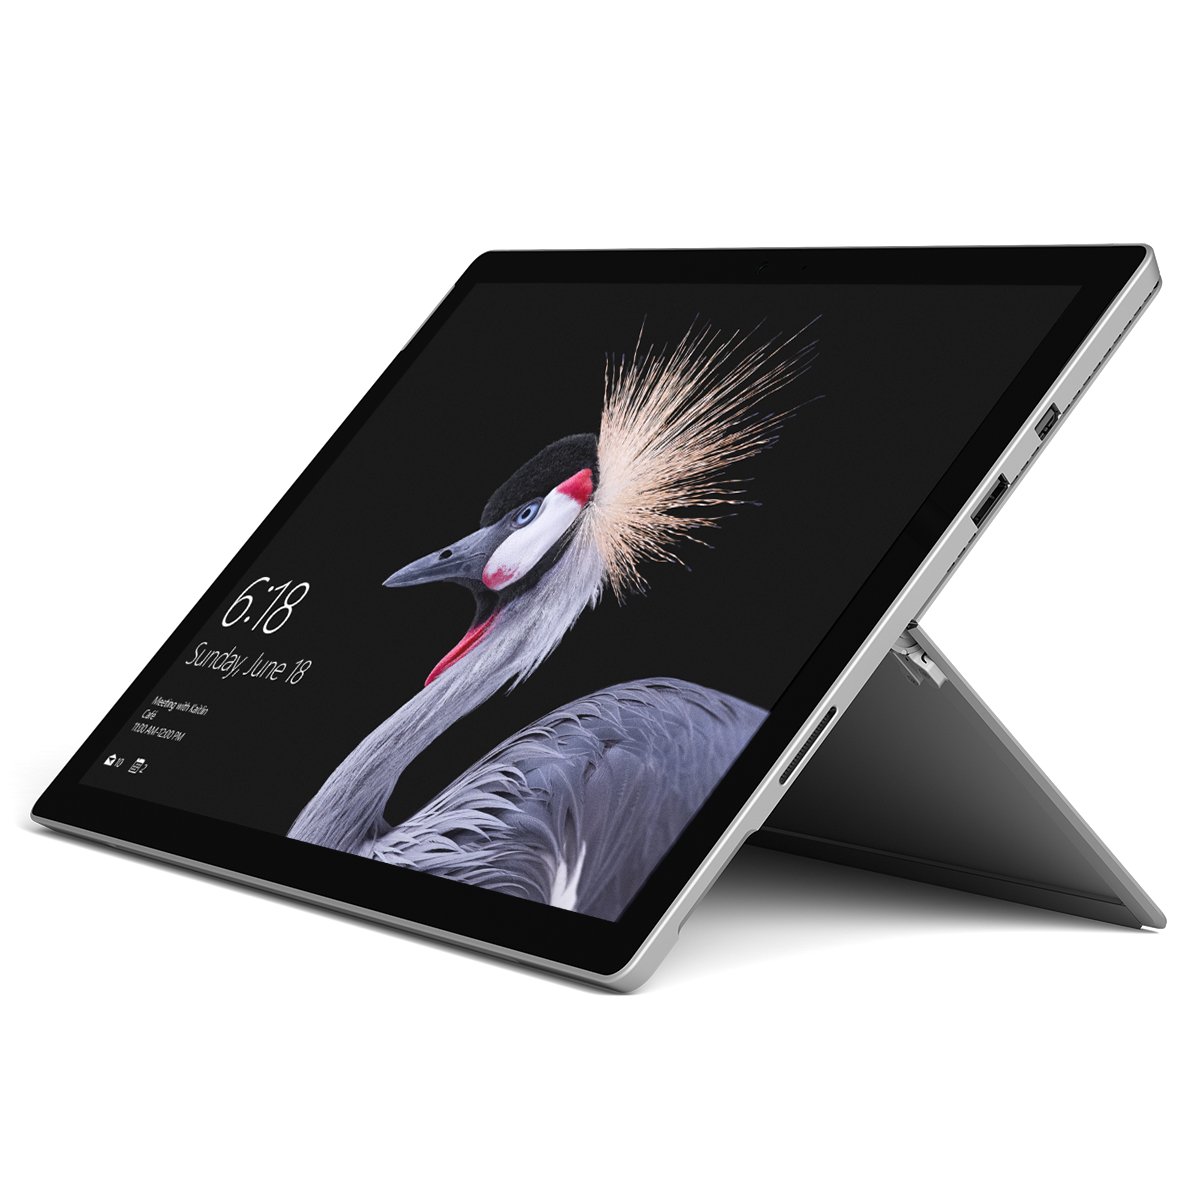 Microsoft Surface Pro (5th Gen) (Intel Core i5, 4GB RAM, 128GB)